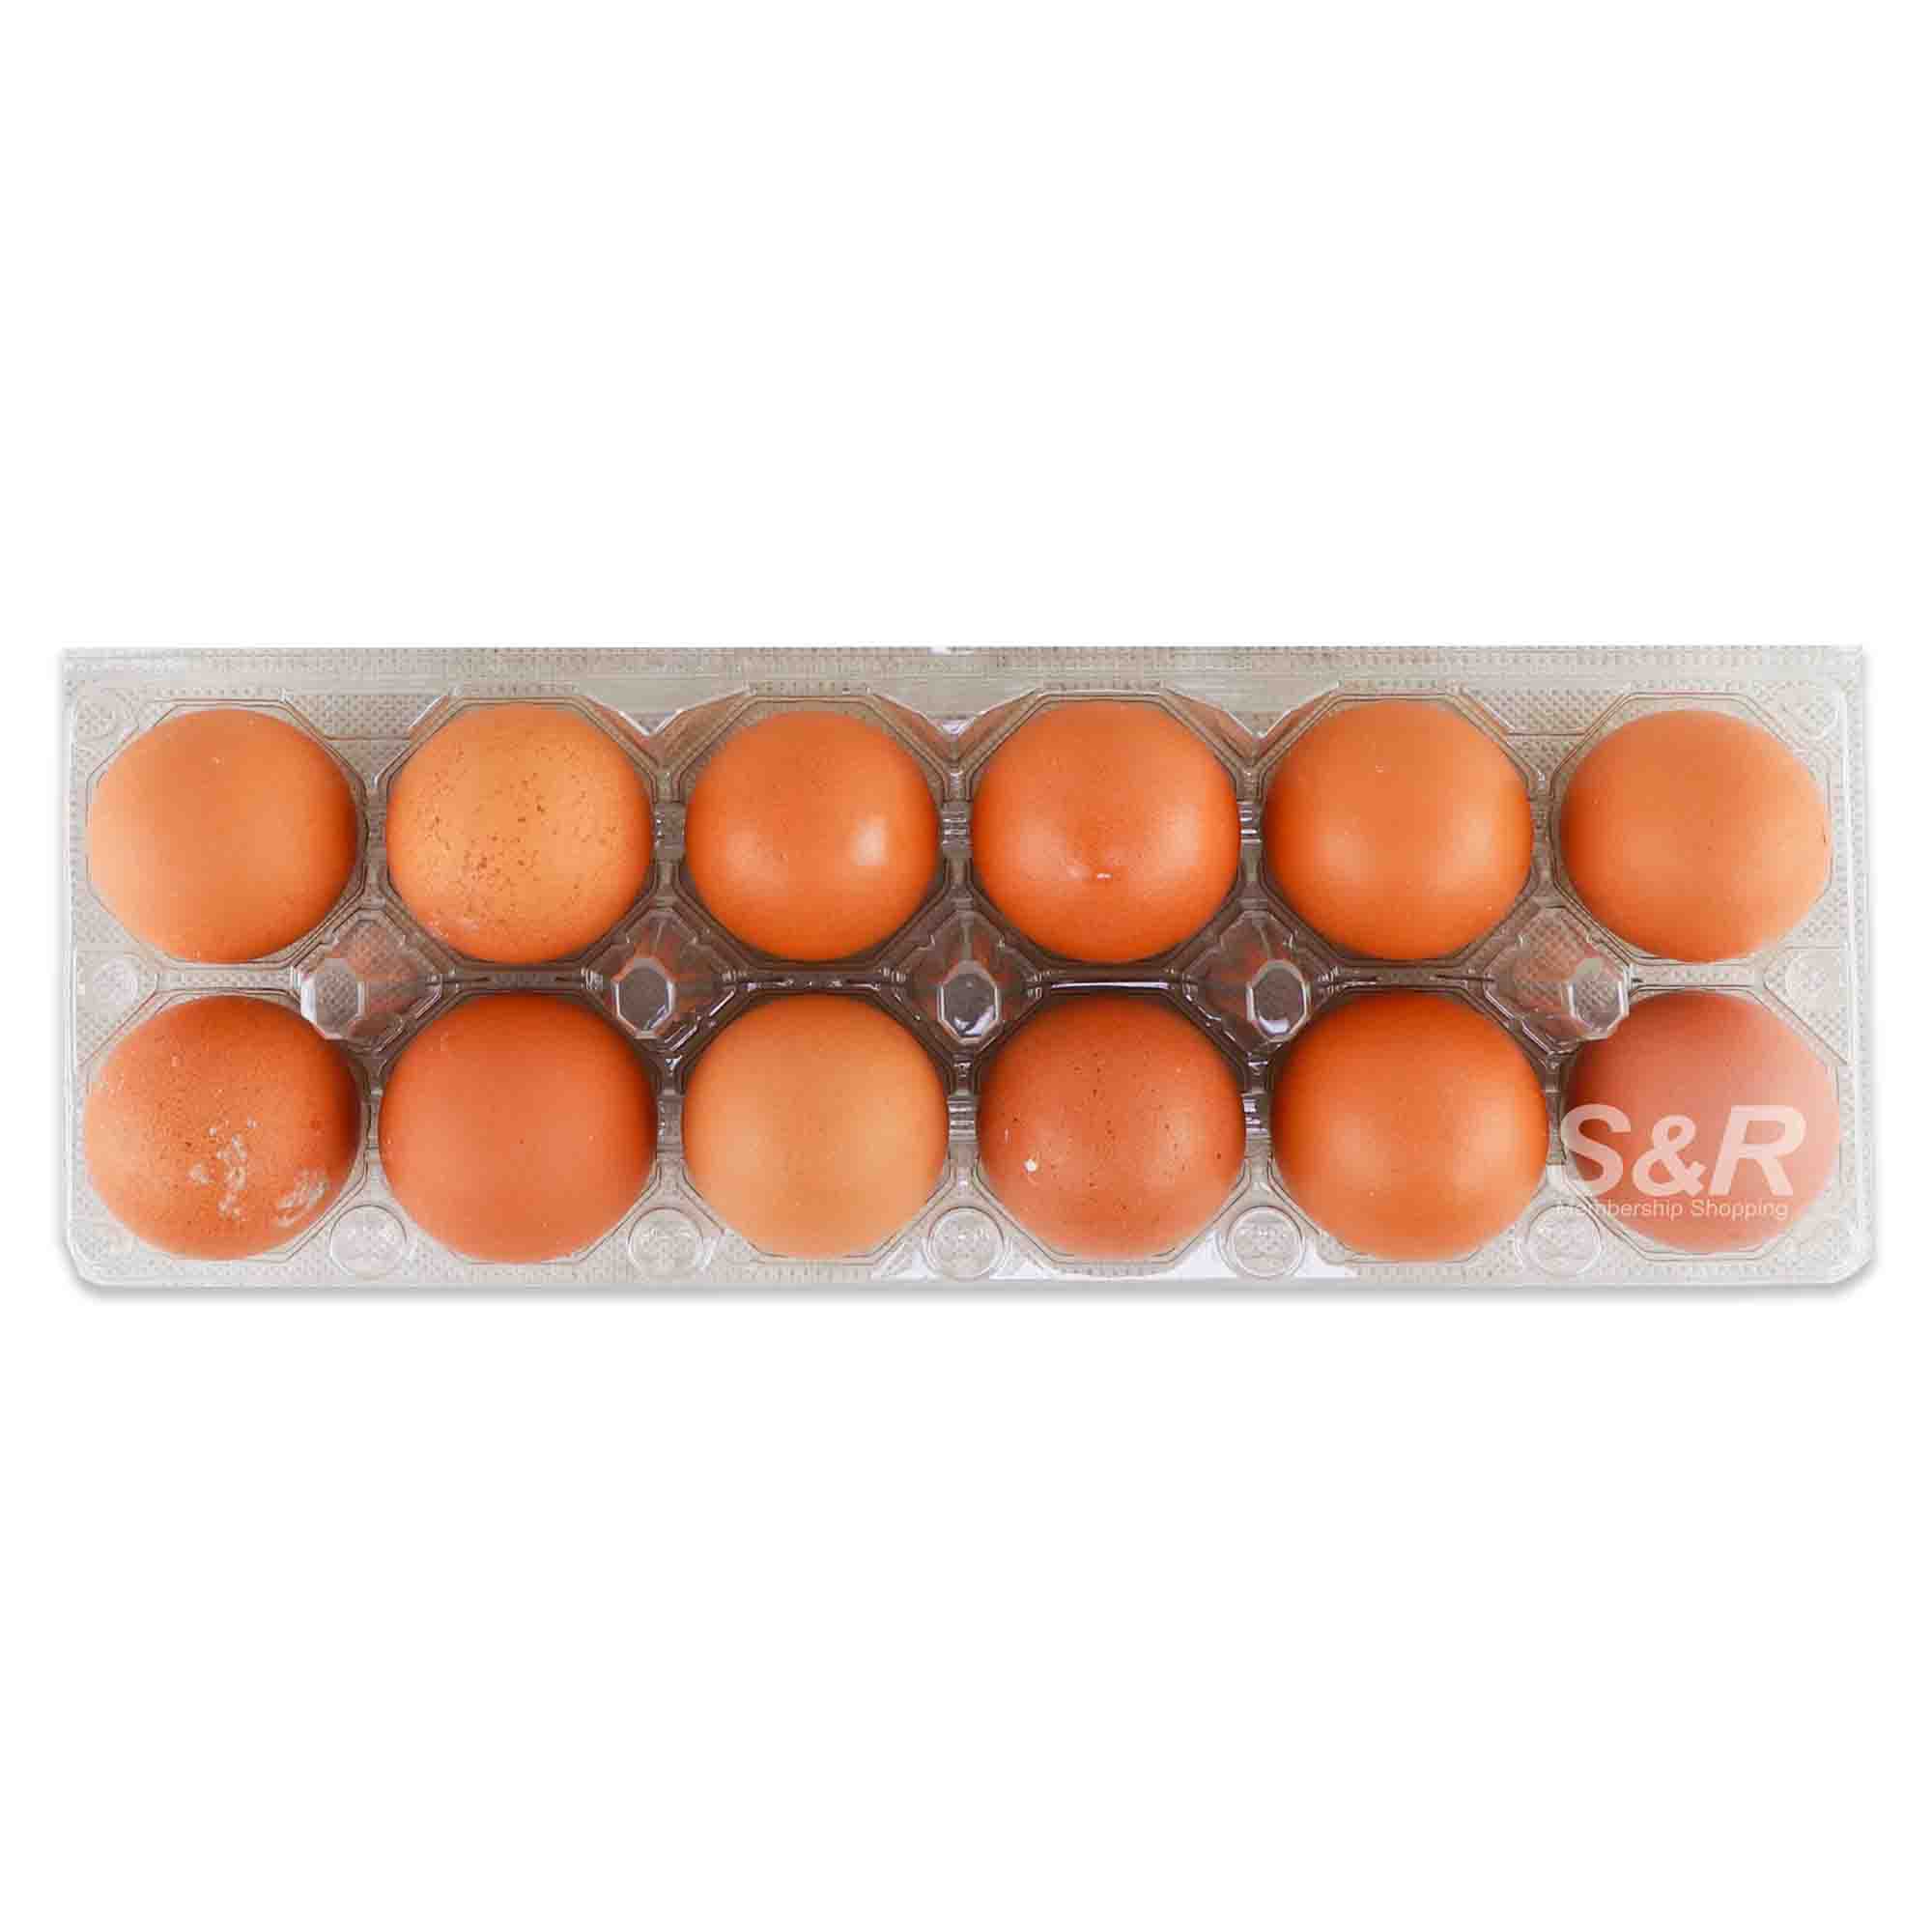 S&R Membership Shopping Morning Fresh Cage-Free Eggs 12pcs